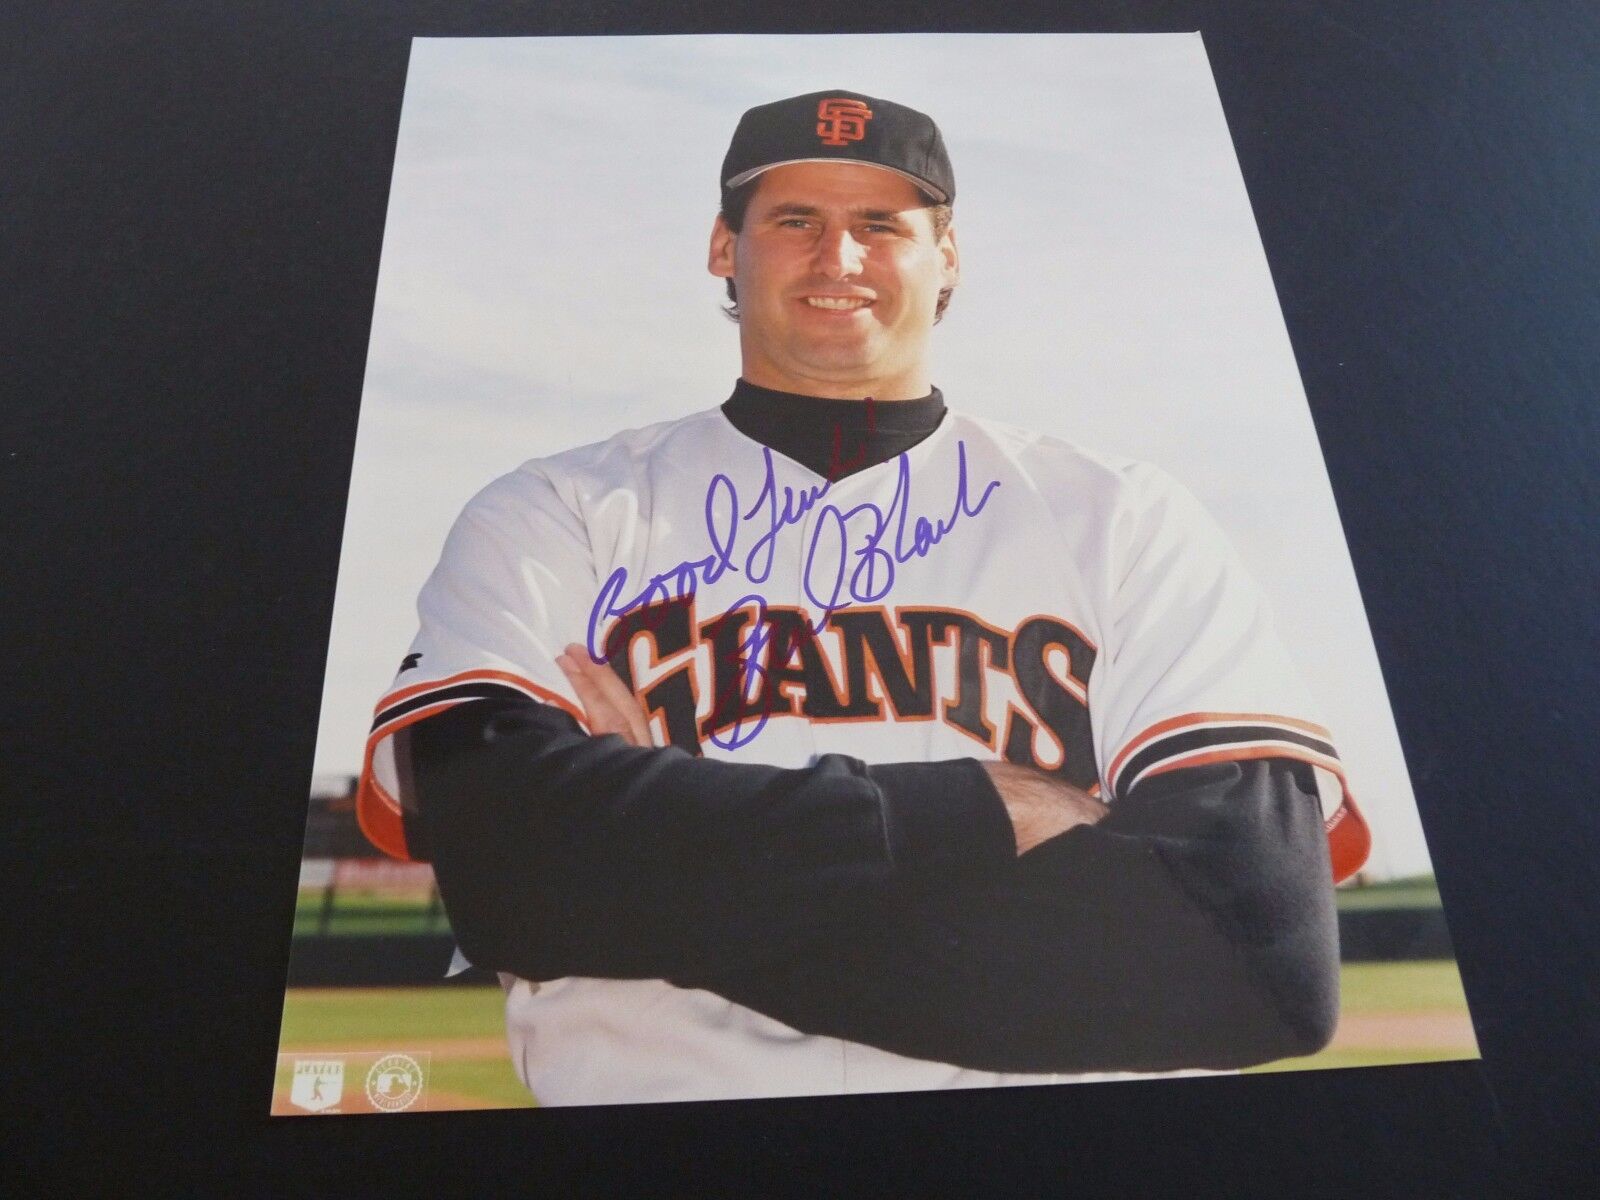 Bud Black Giants Baseball Signed Autographed 8x10 Photo Poster painting PSA Beckett Guaranteed